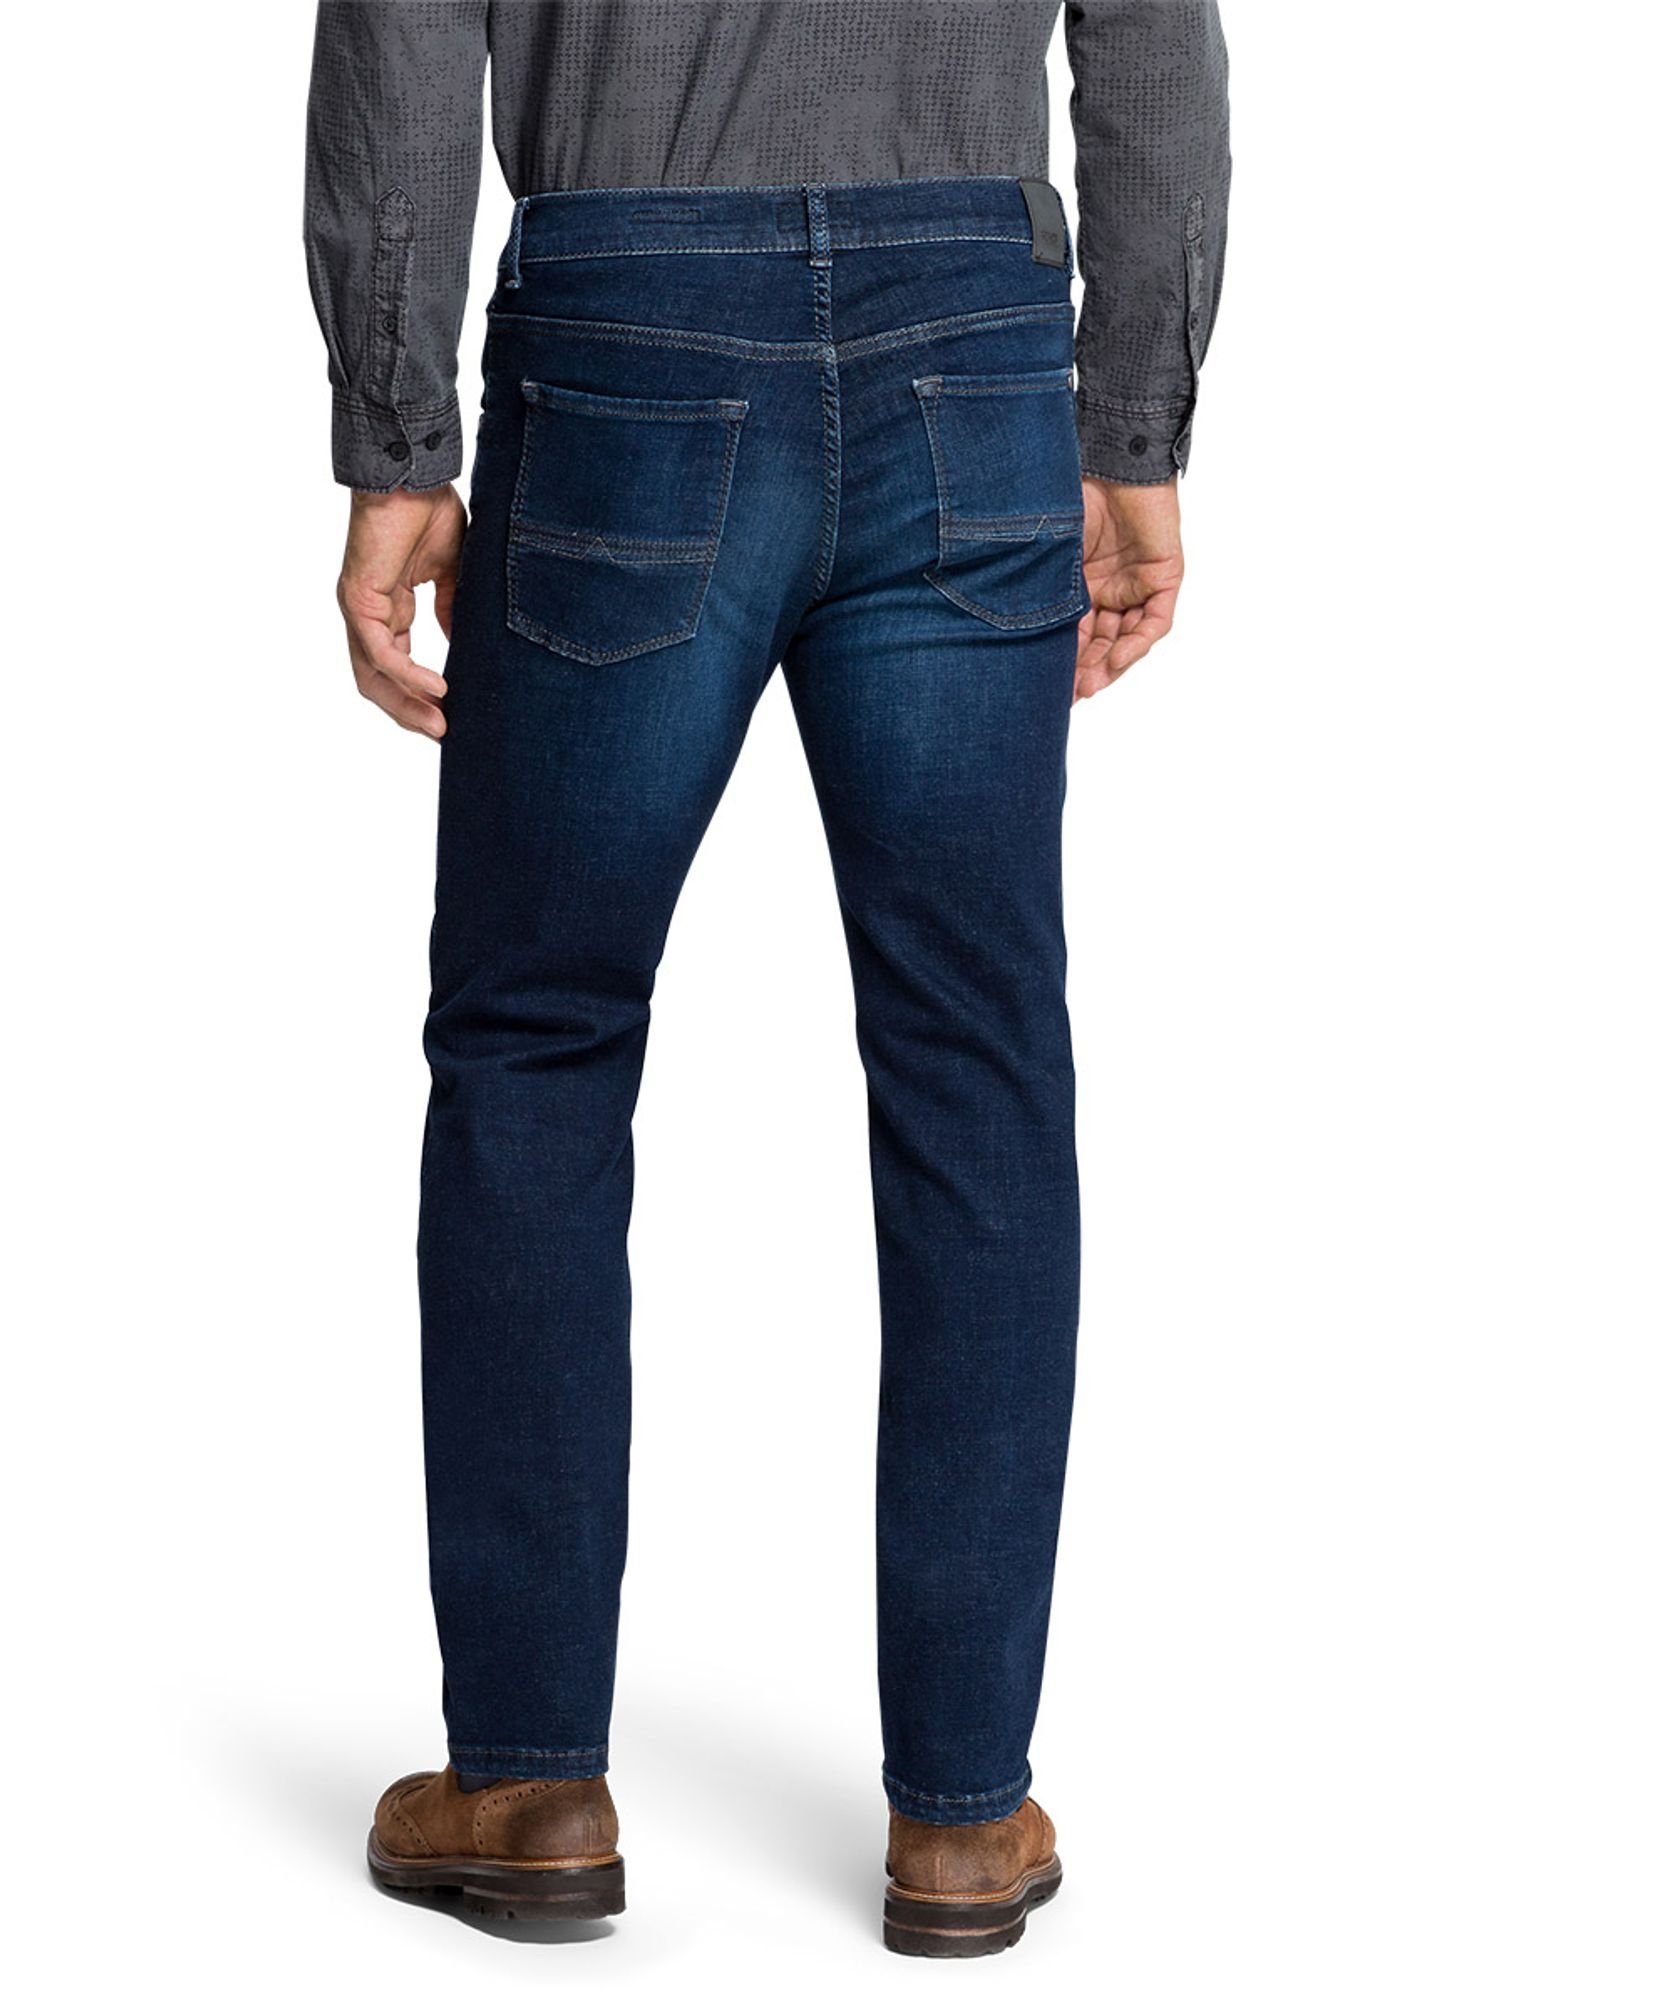 Pioneer Authentic Jeans 5-Pocket-Jeans PO 6815 dark Elastizität blue used 16741.6509 buffies hohe